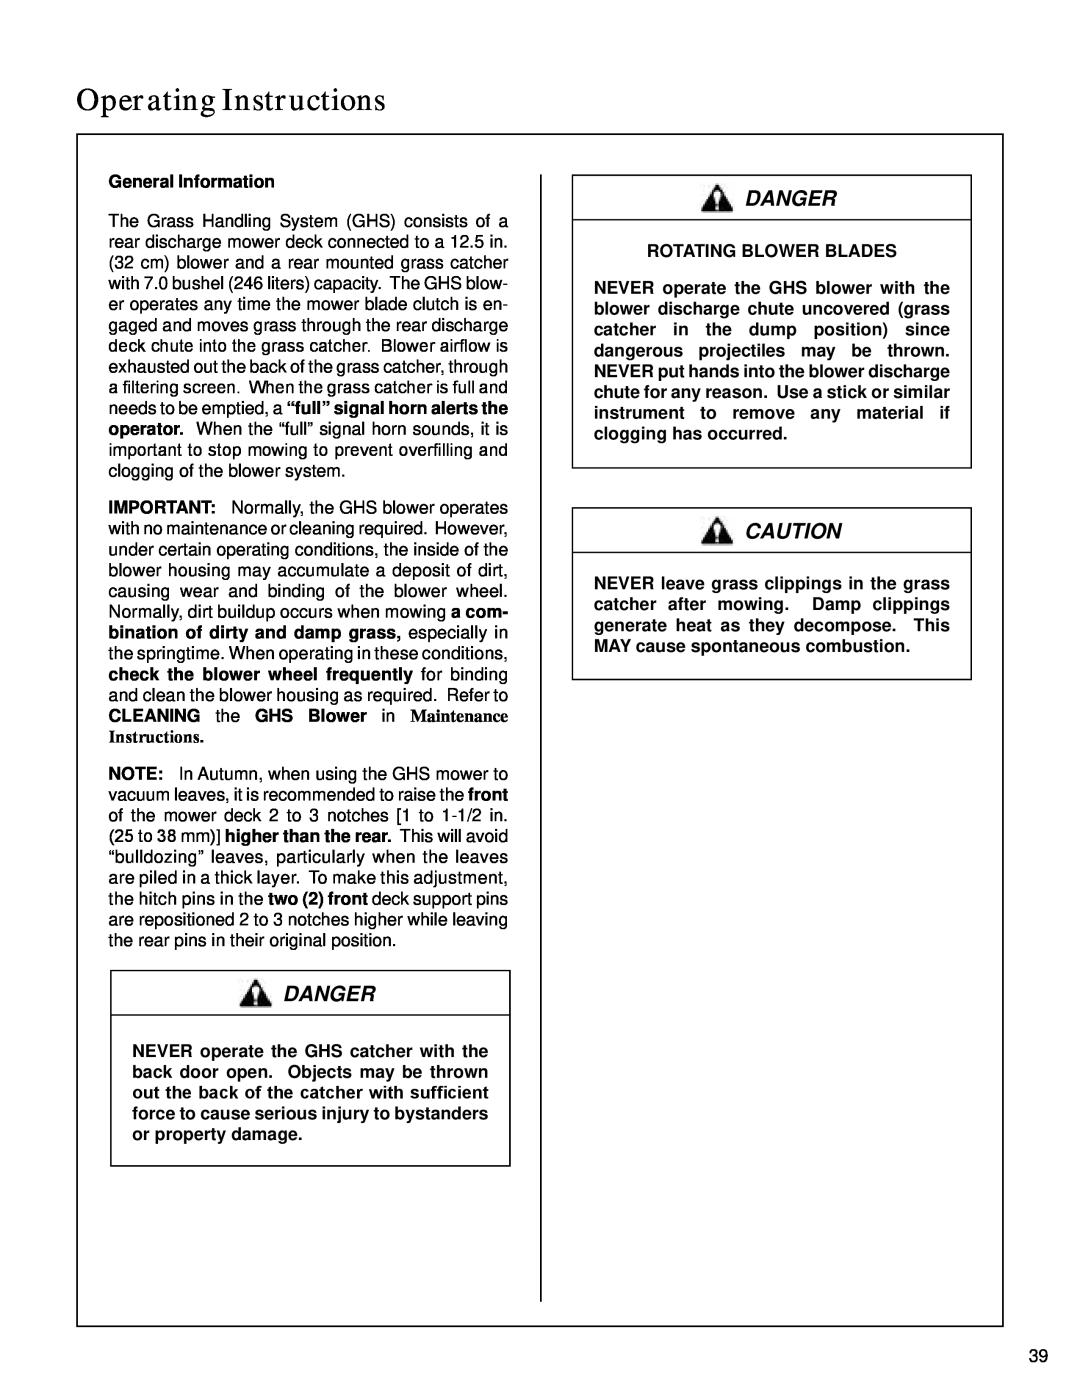 Walker S14 manual General Information, Rotating Blower Blades, Operating Instructions, Danger 